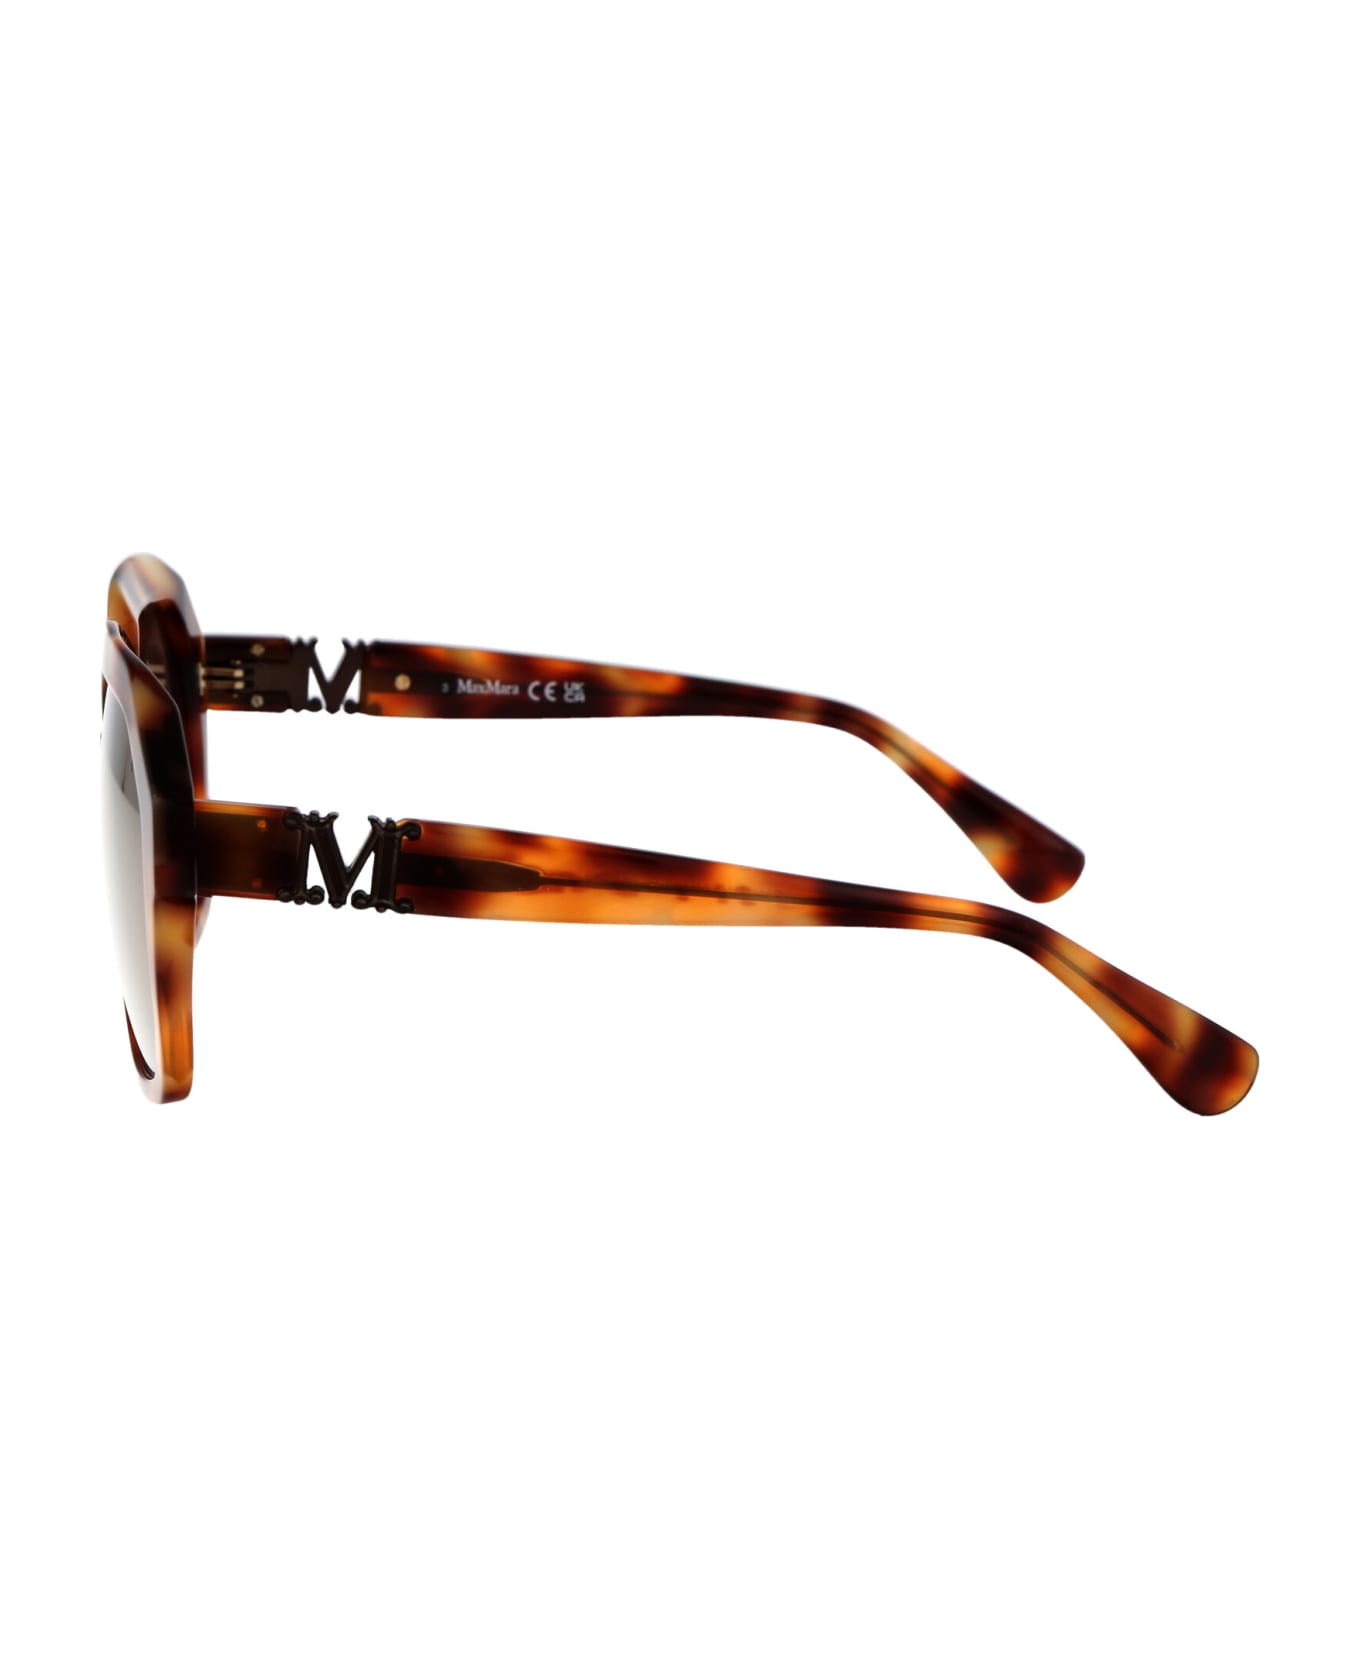 Max Mara Emme12 Sunglasses - 53E Avana Bionda/Marrone